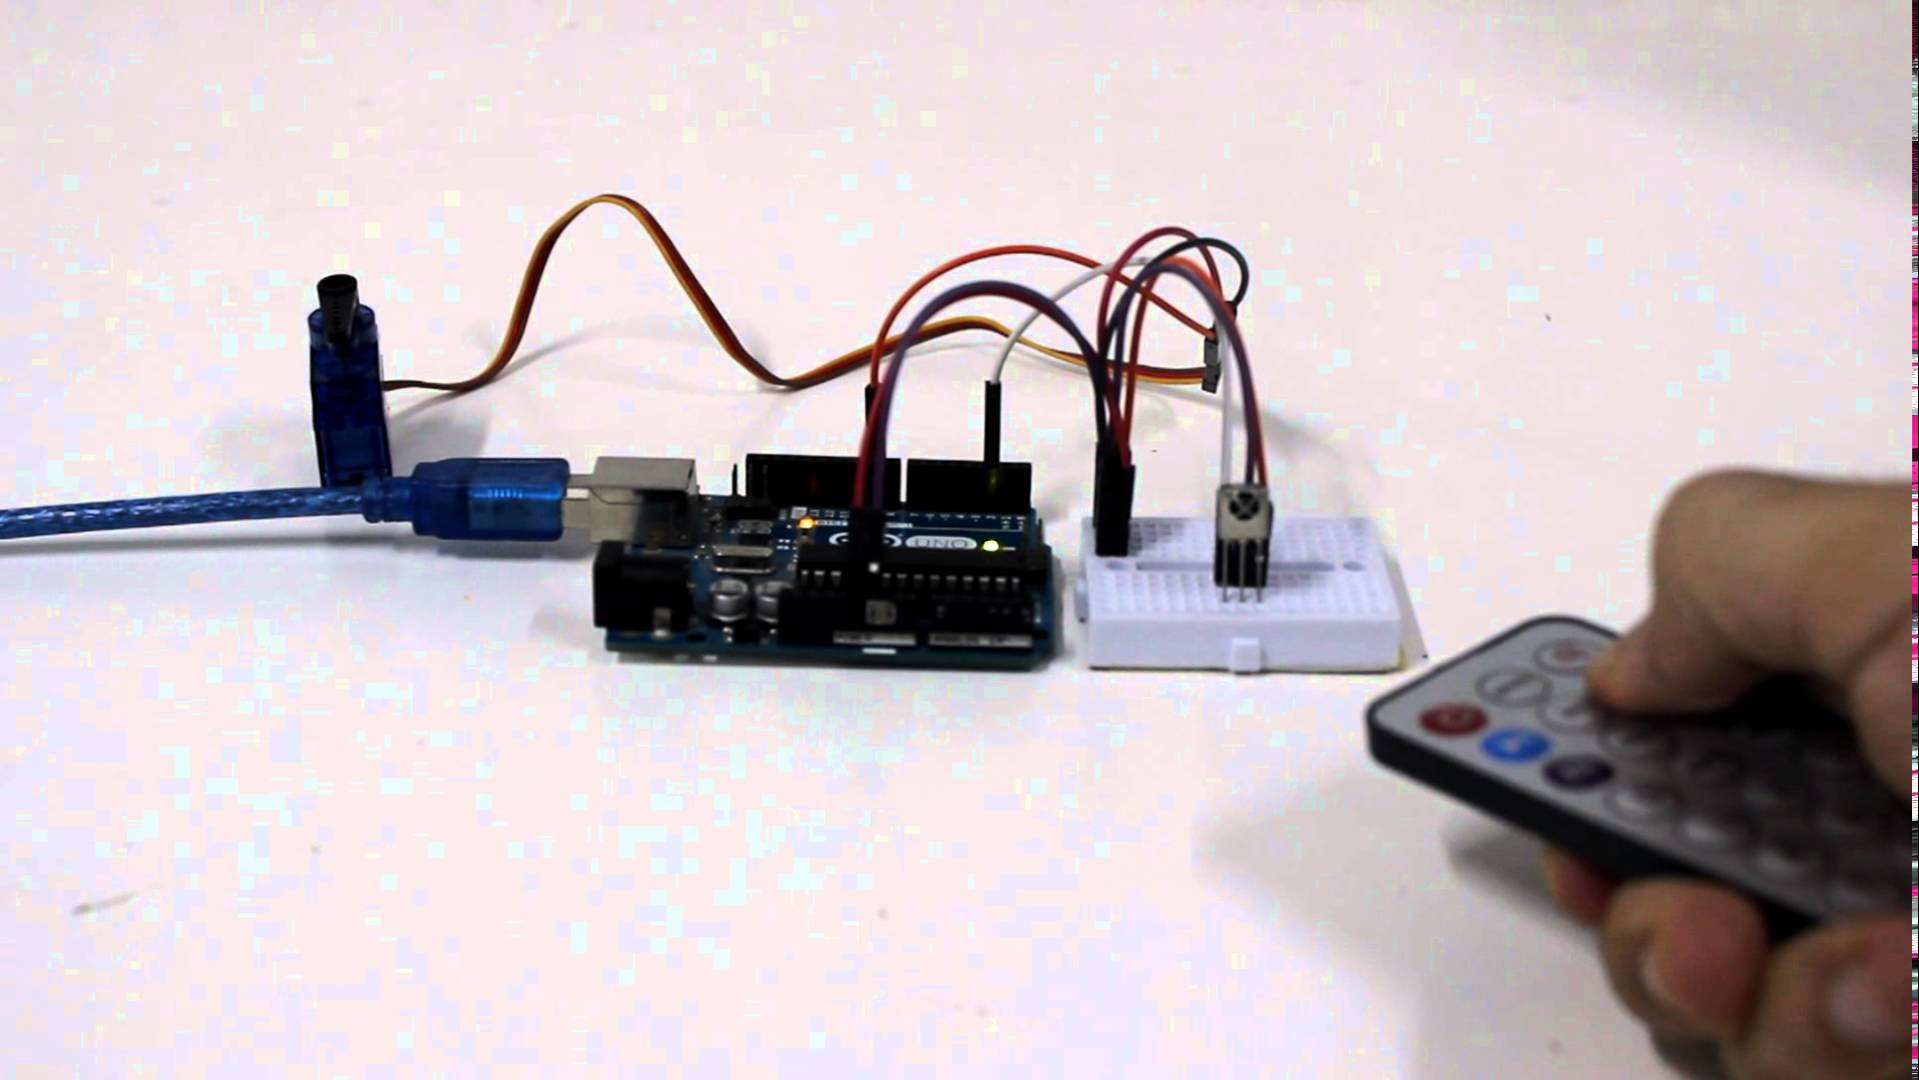 Controlling servo motor using IR remote control